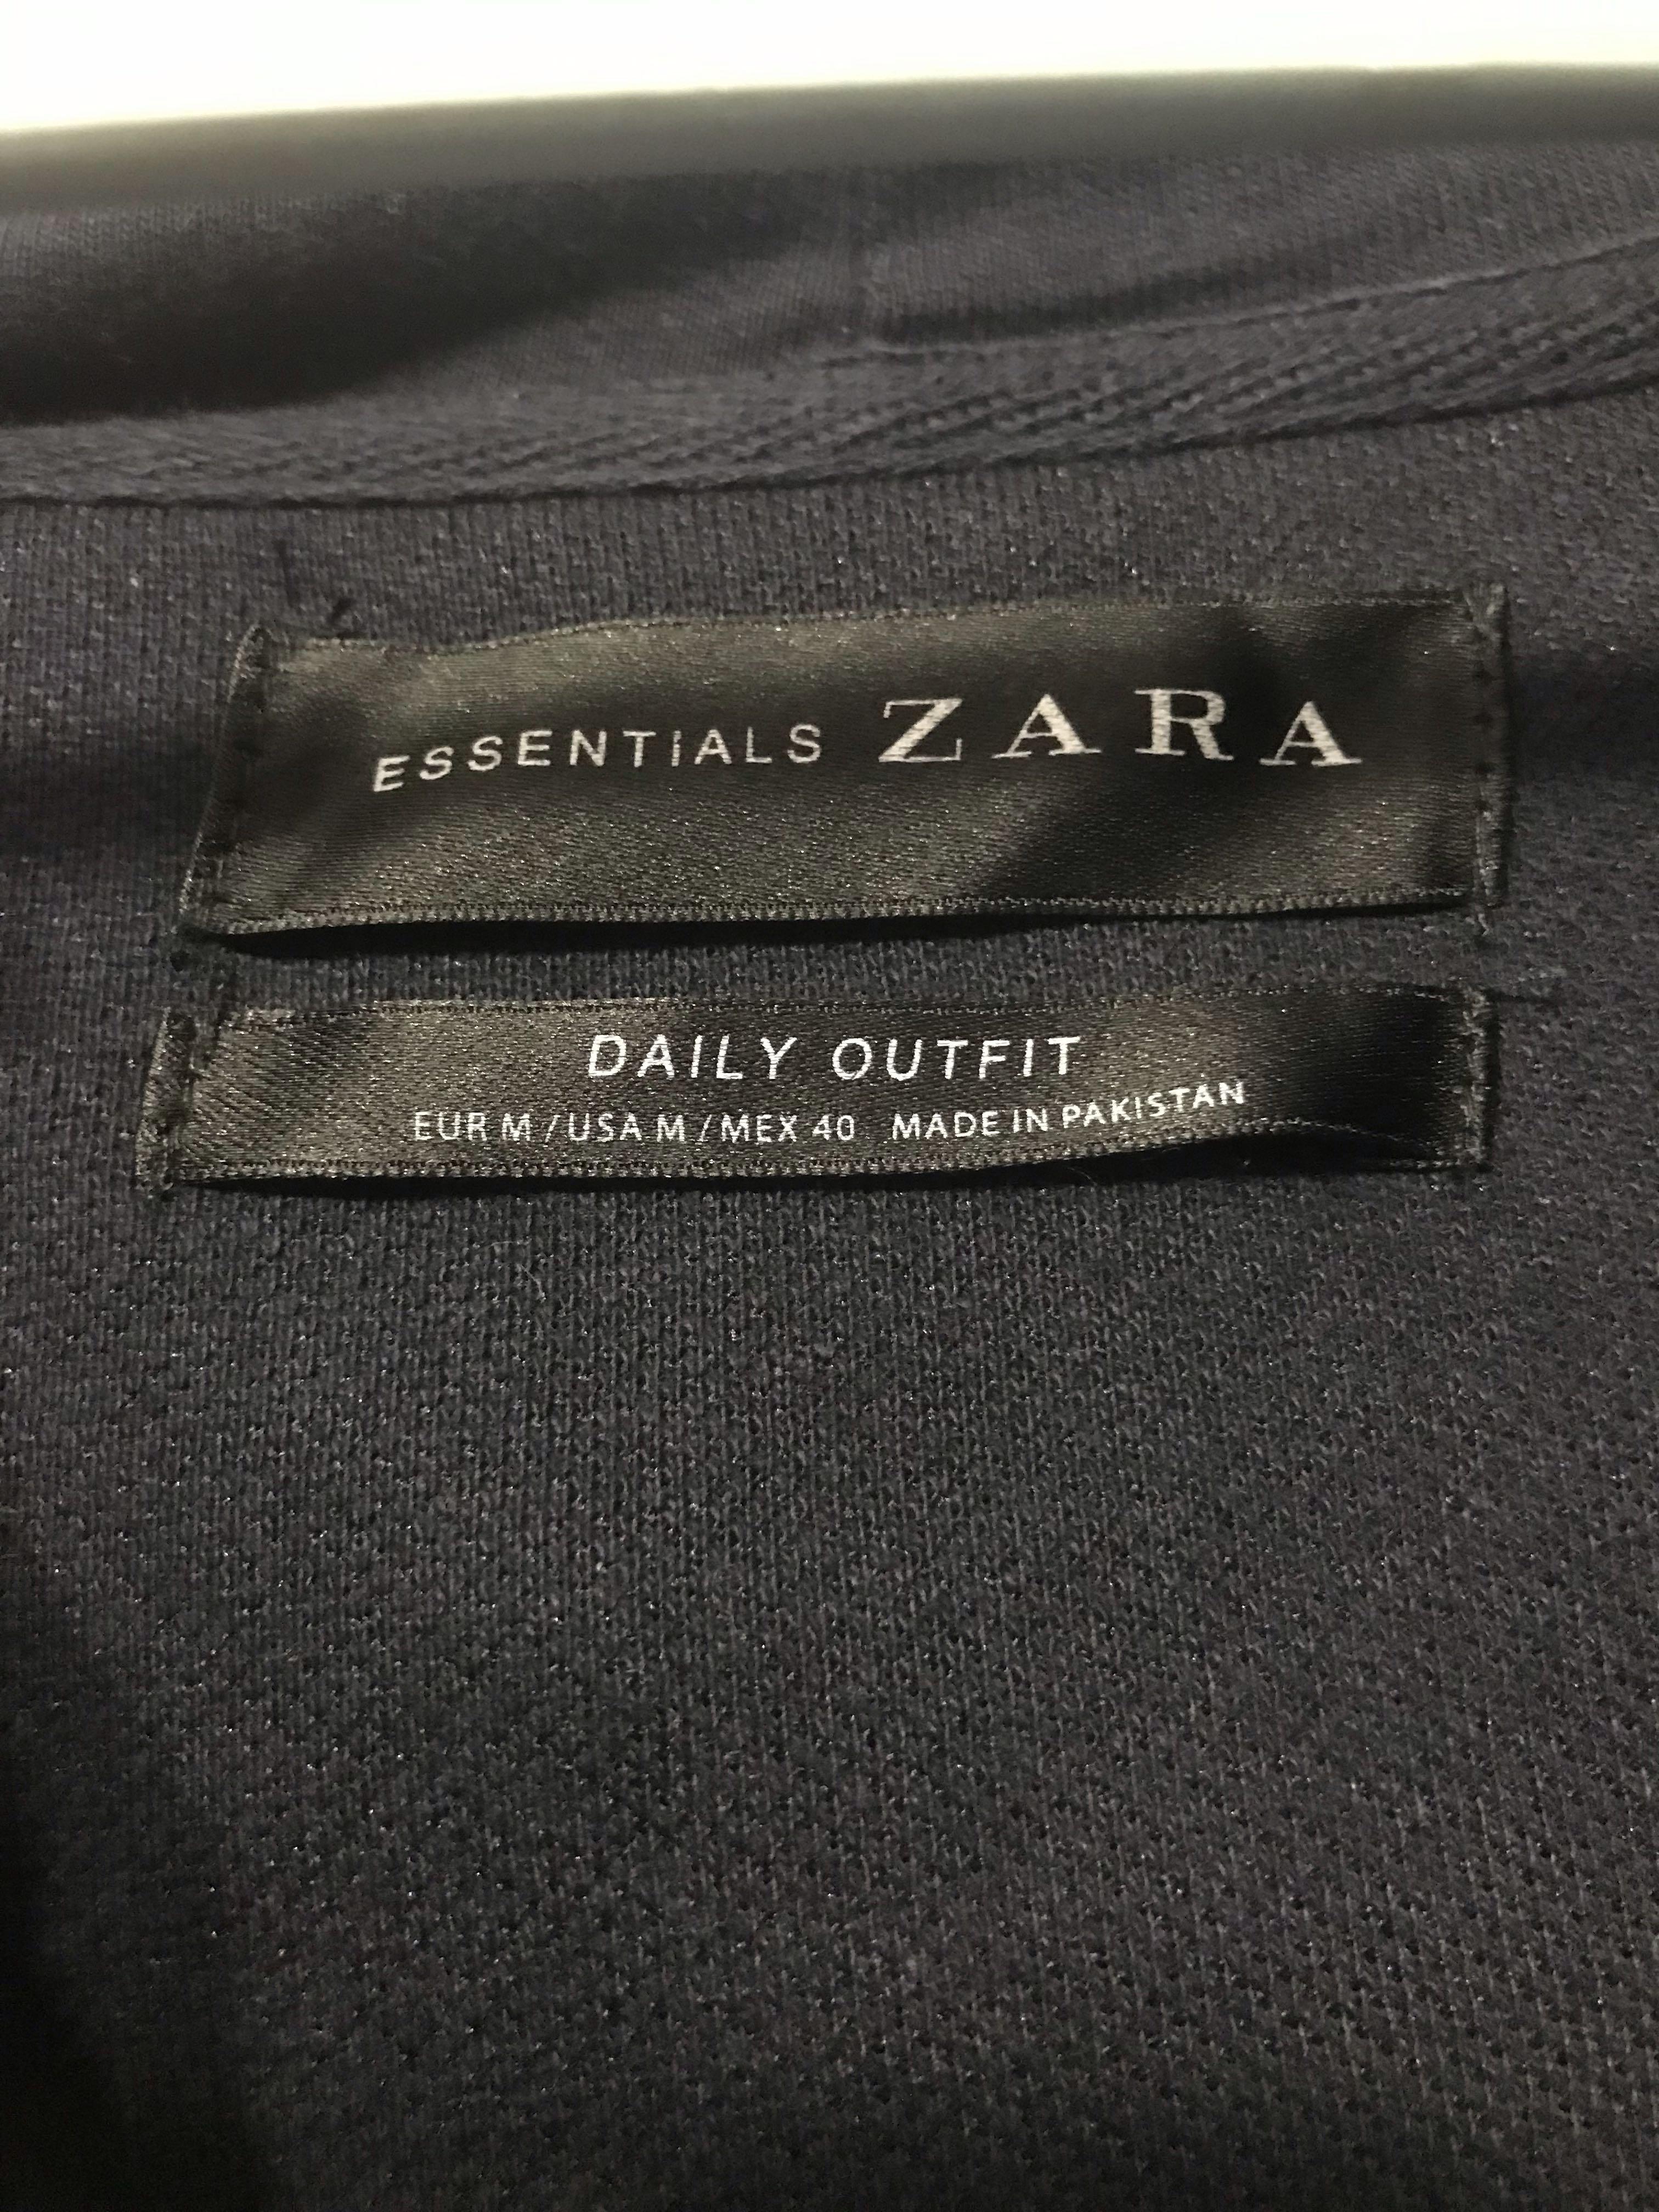 zara essentials daily outfit